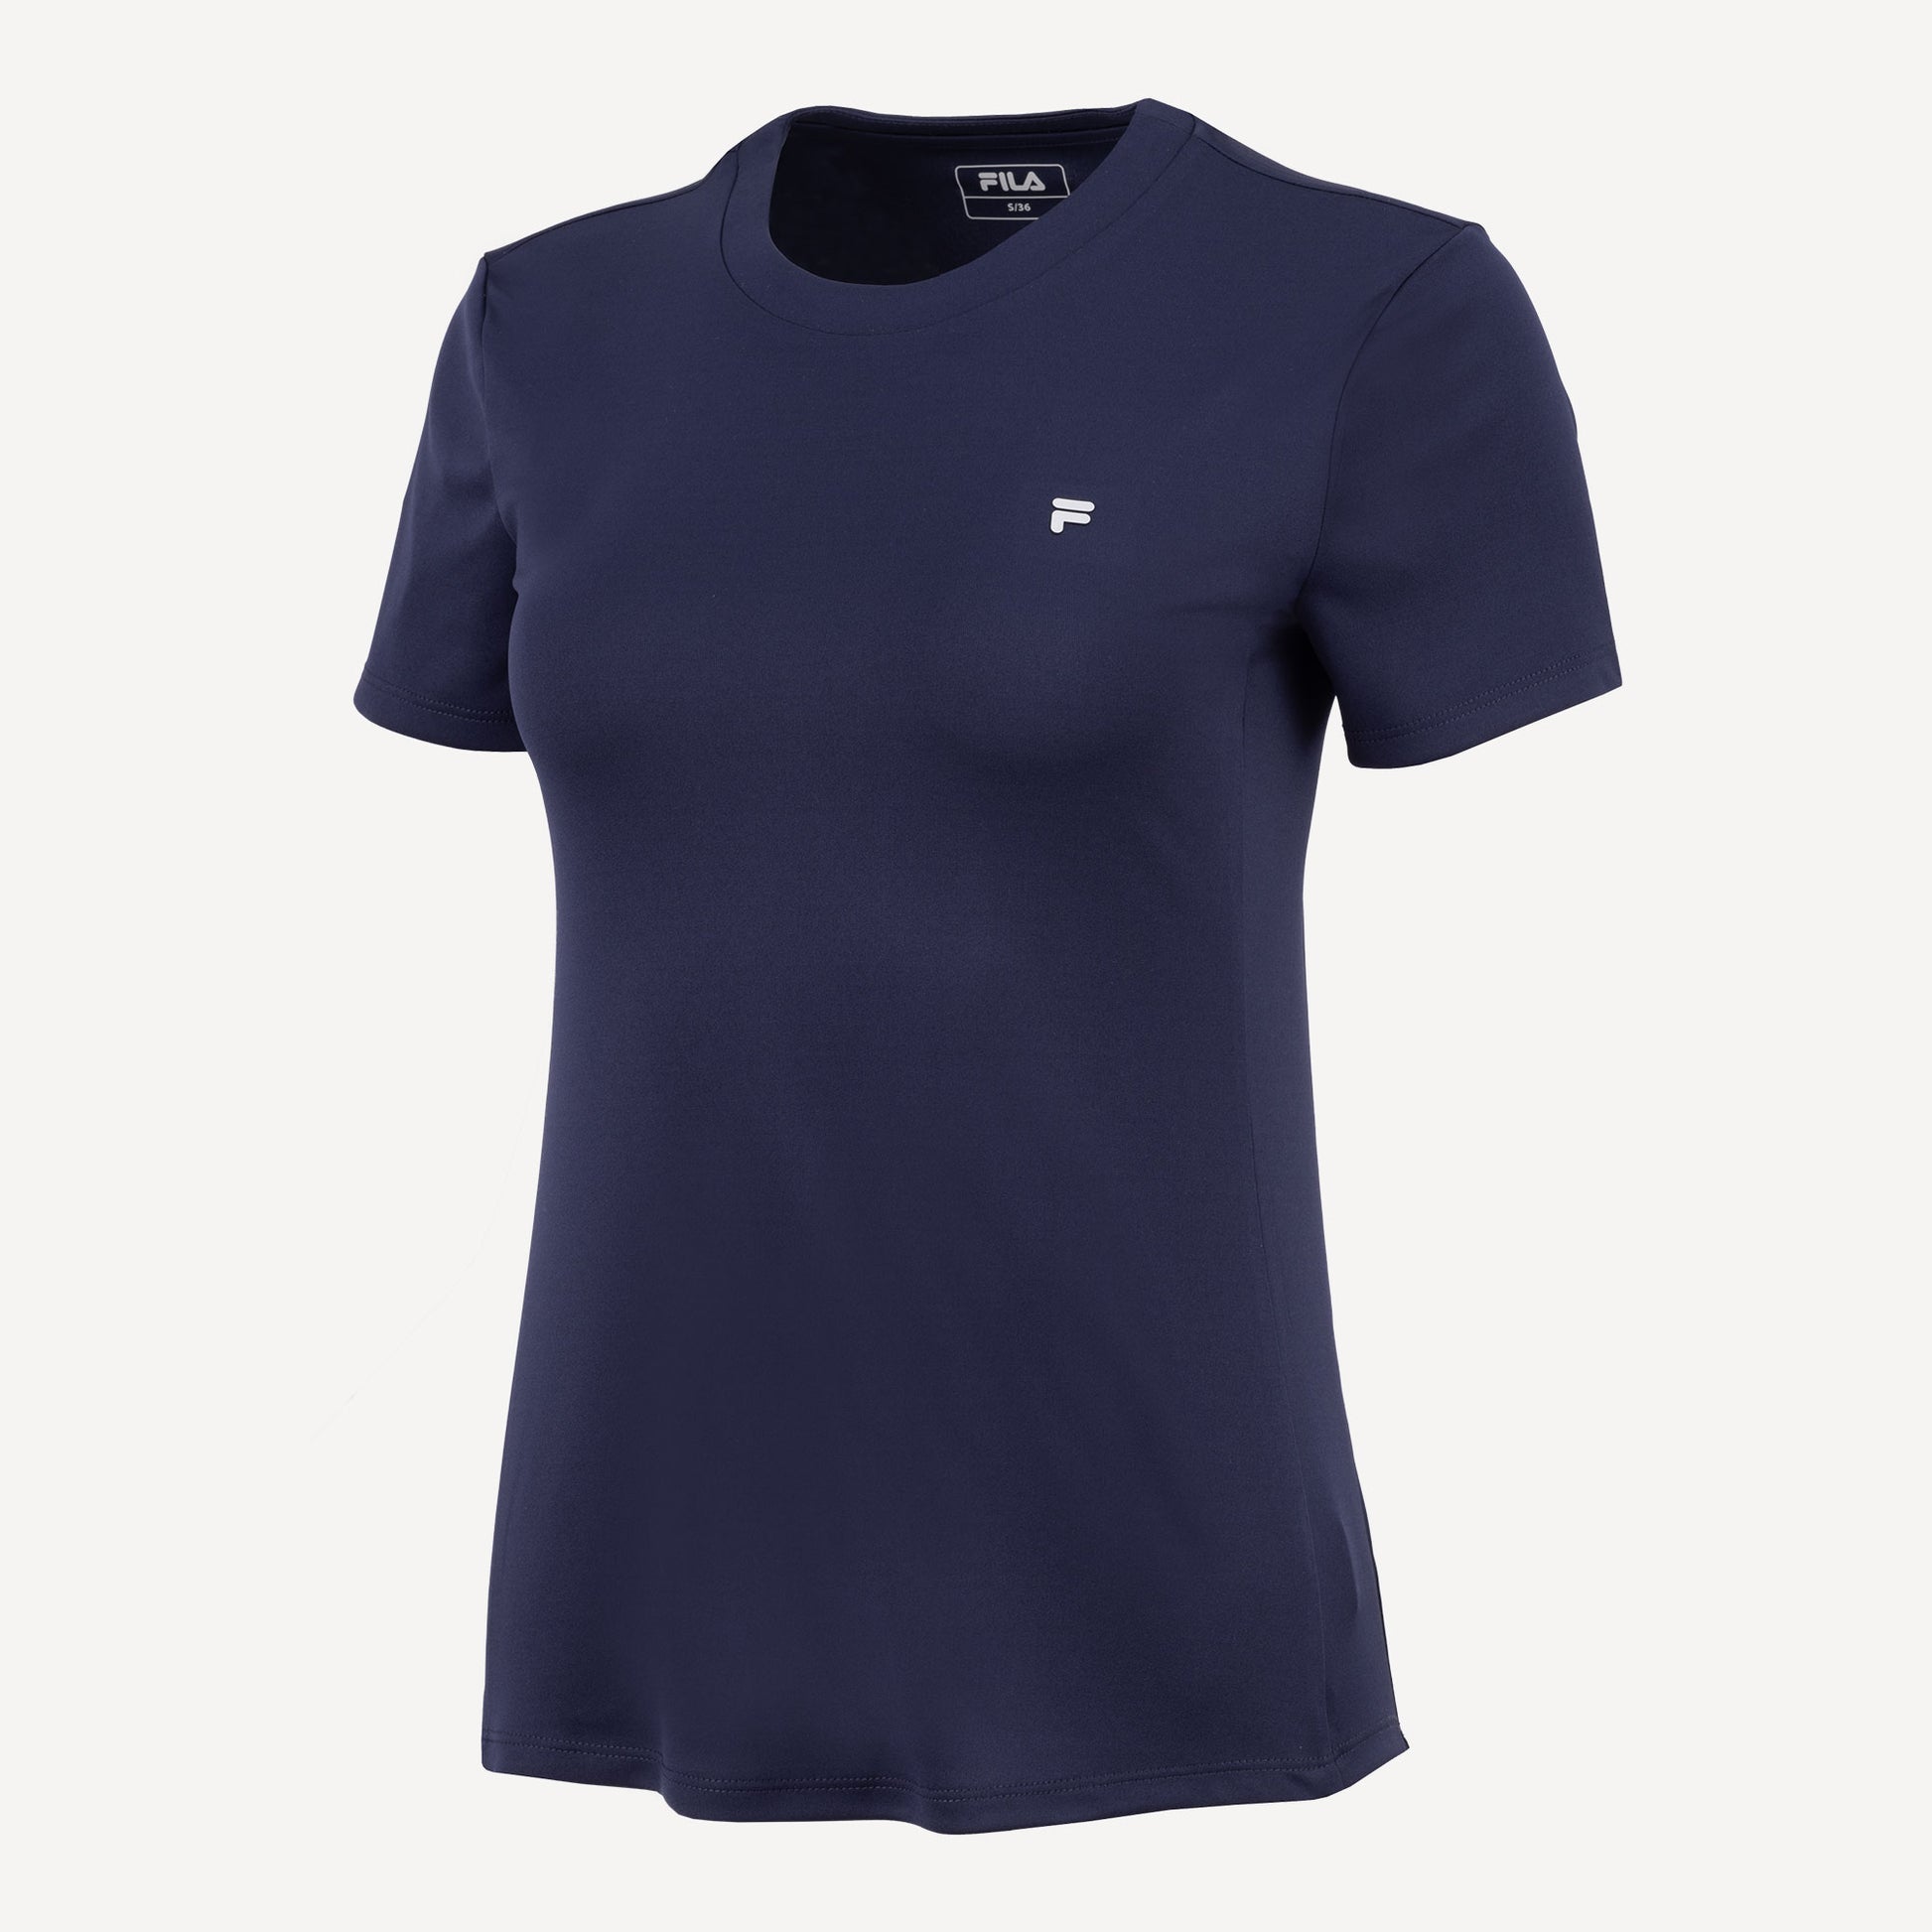 Fila Paula Women's Tennis Shirt Dark Blue (1)